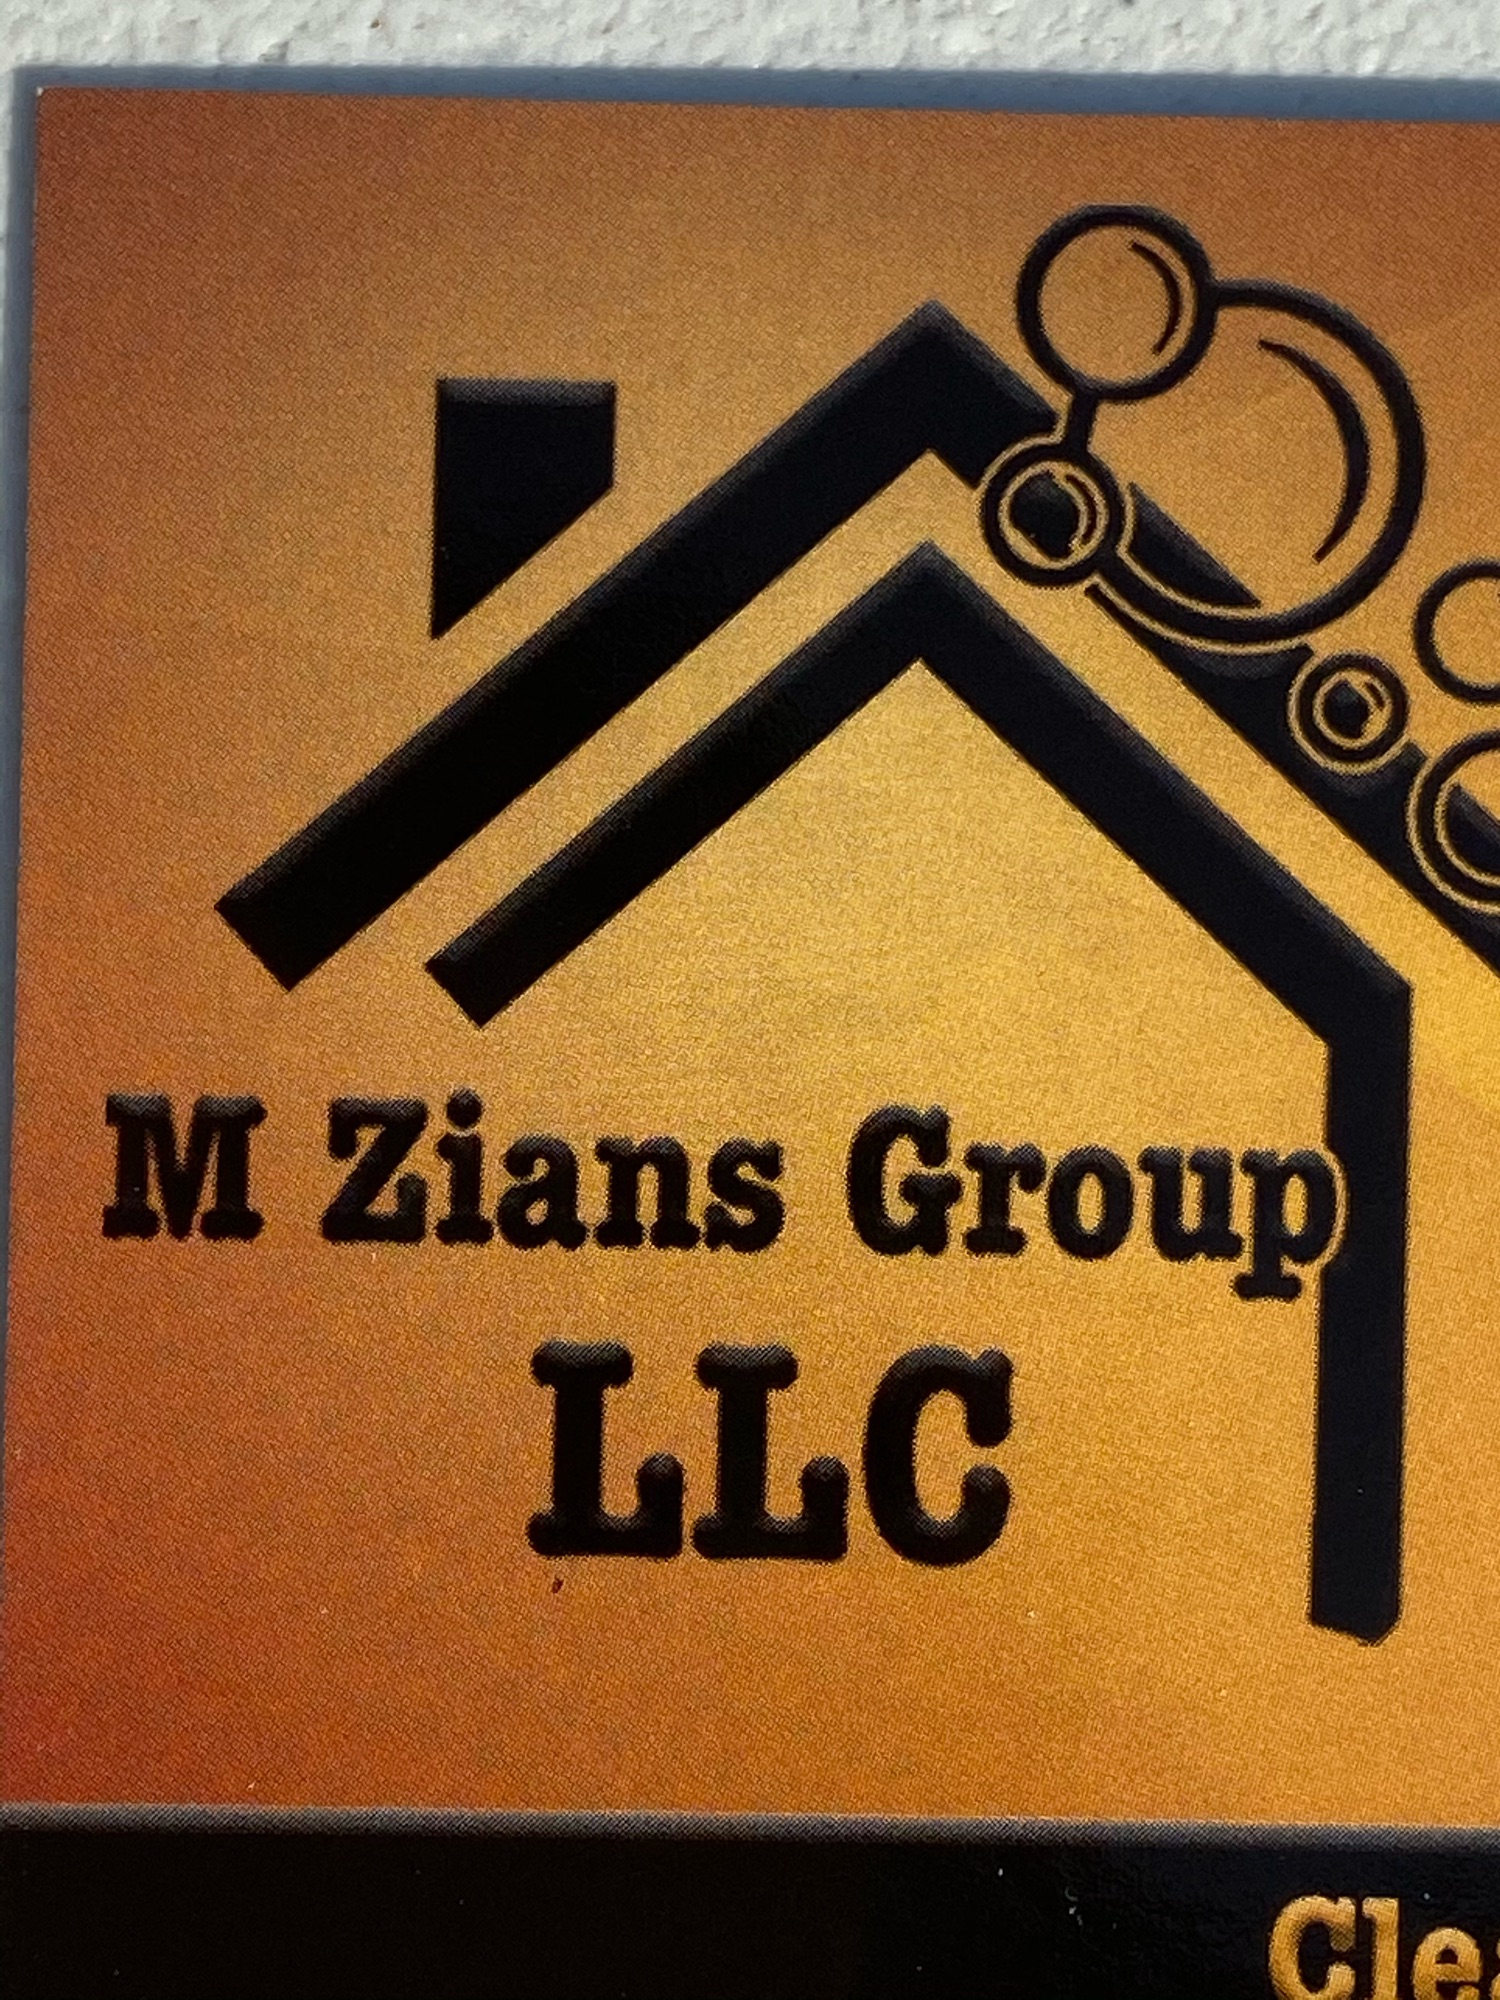 M Zians Group, LLC Logo